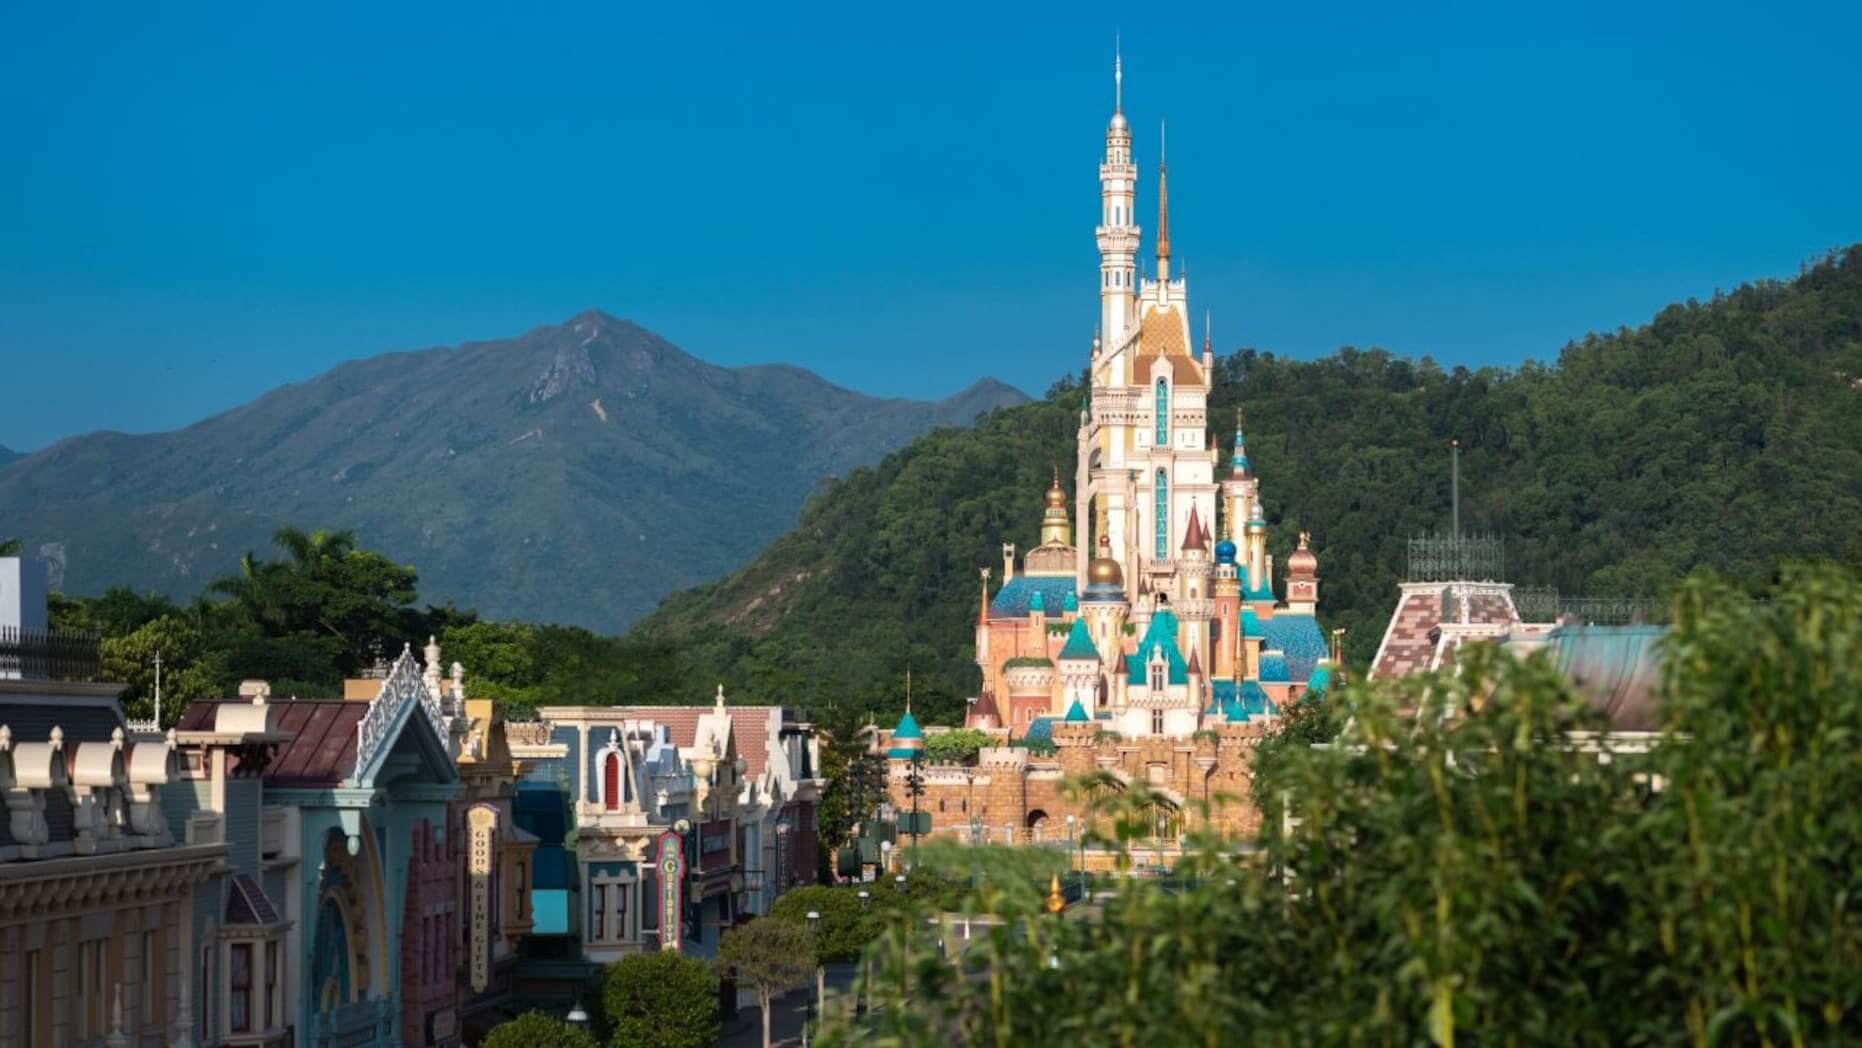 Hong Kong Disneyland Closes for Third Time Due to Covid-19 Pandemic